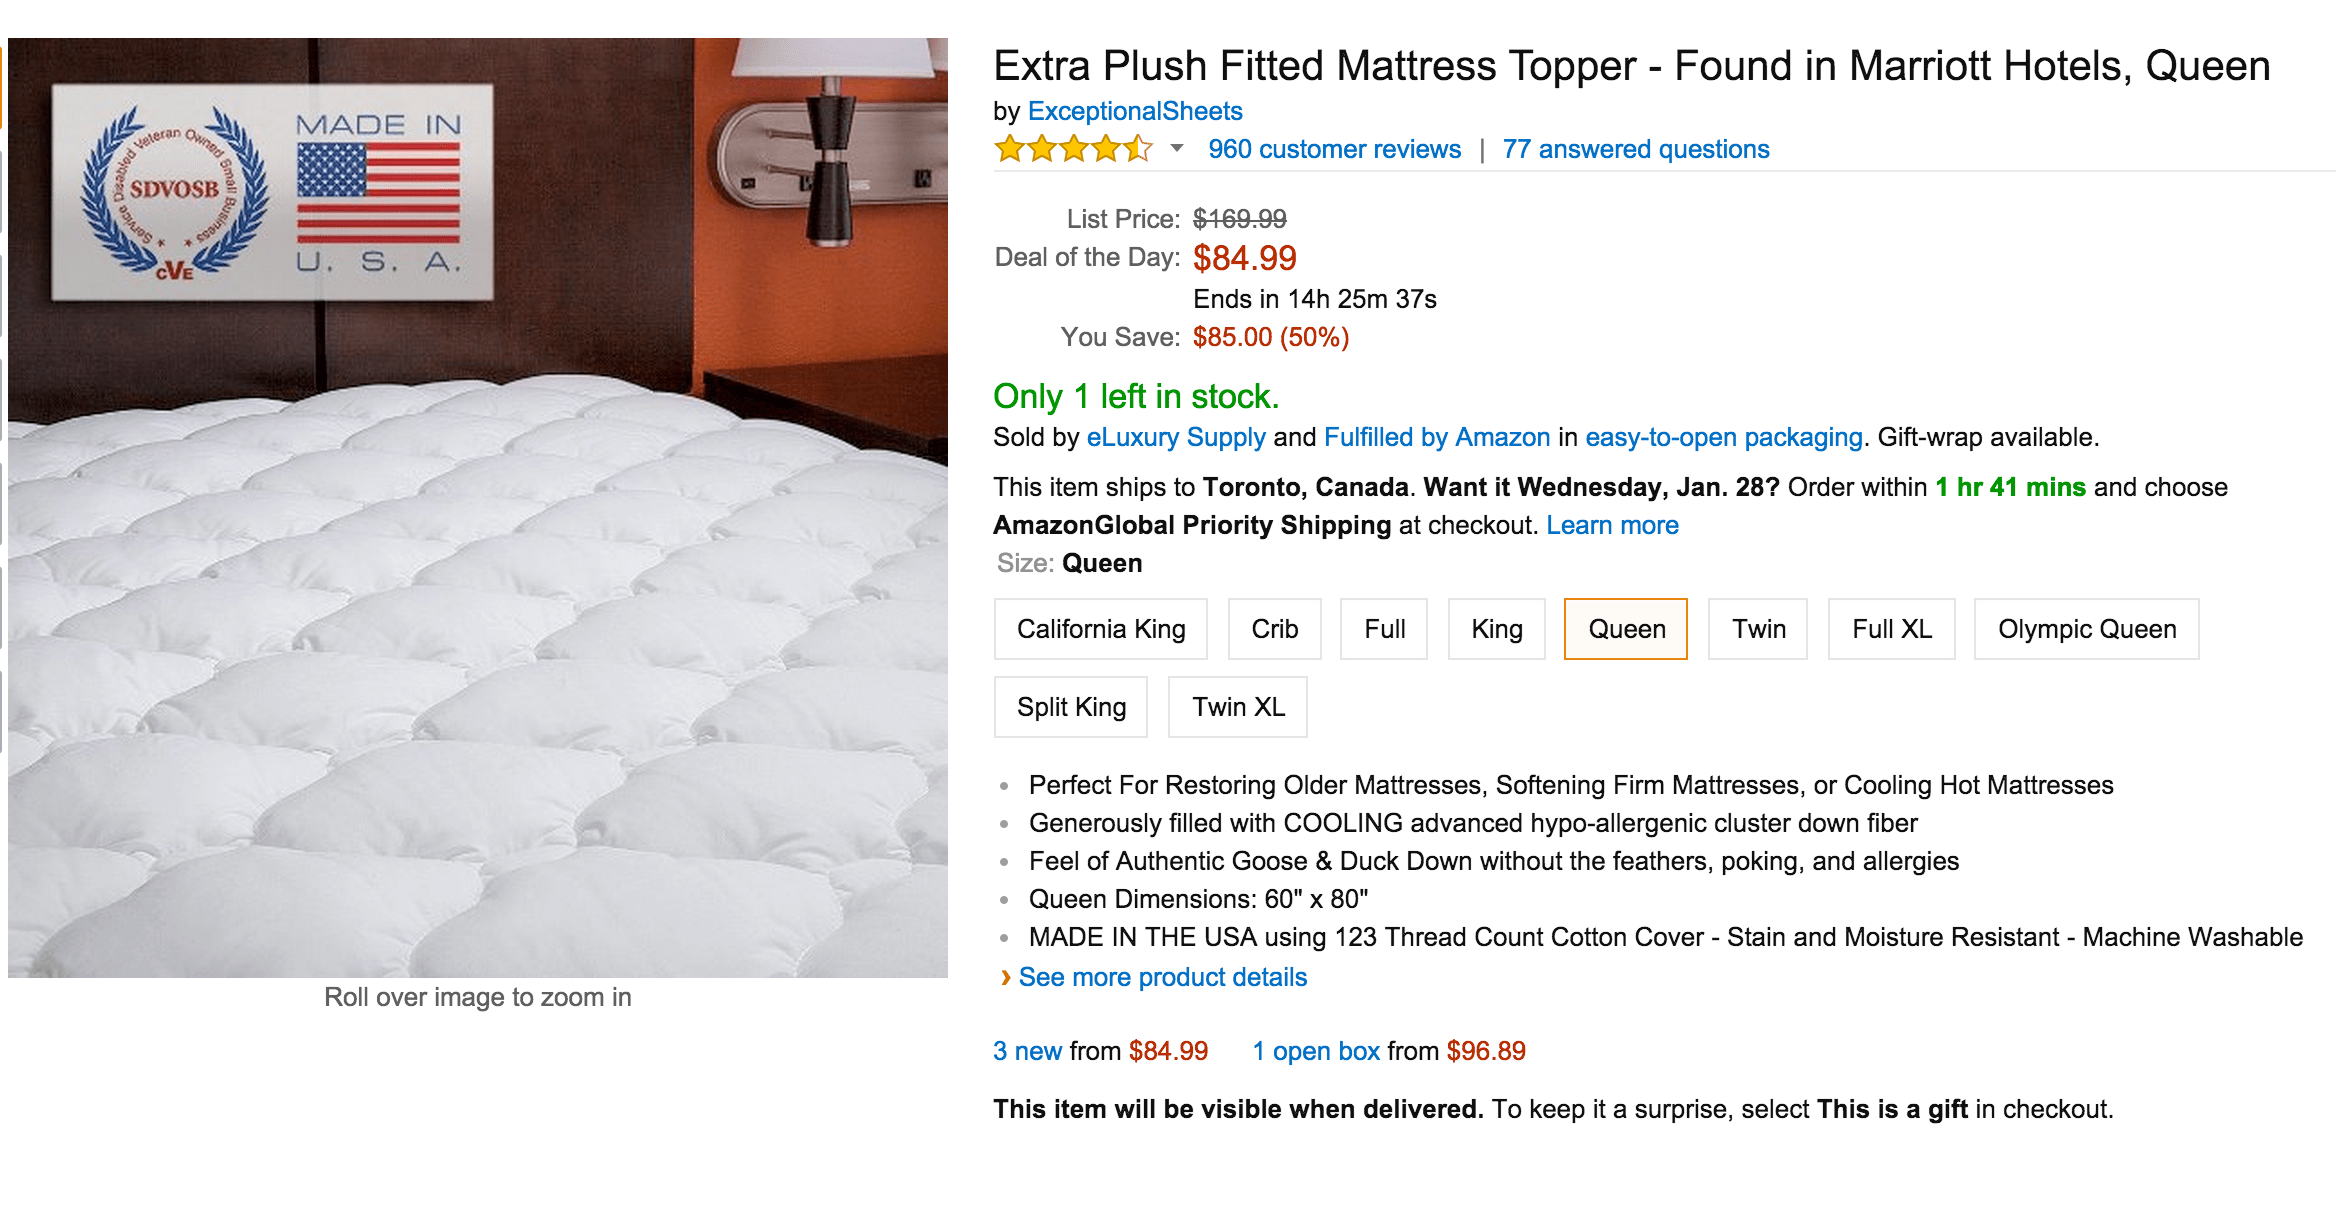 extra plush fitted mattress topper marriott